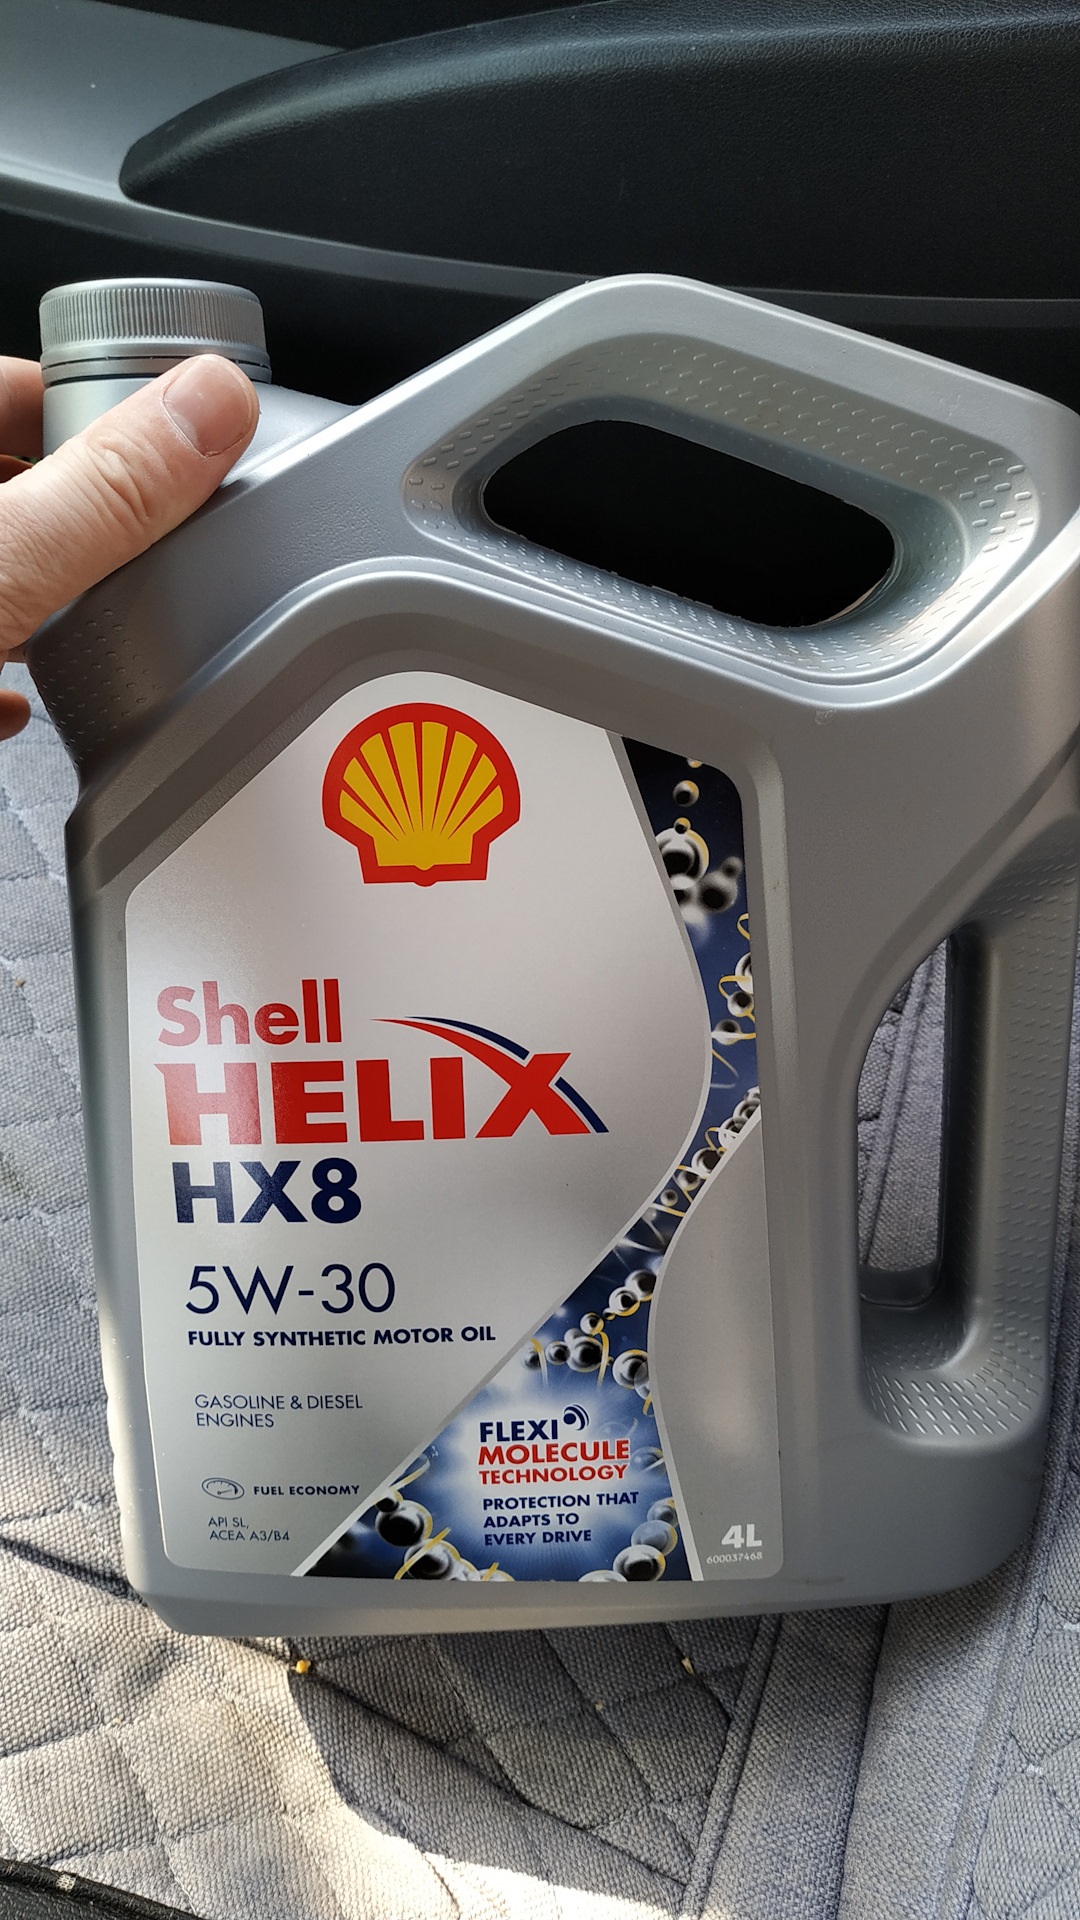 Shell моторное 5w30 hx8. Shell 5w30 Хендай. Shel Helix hx8 5w30 хёндай Солярис. Shell Helix hx8 5w30 a3/b4. Масло Shell 5/30 Helix hx8.